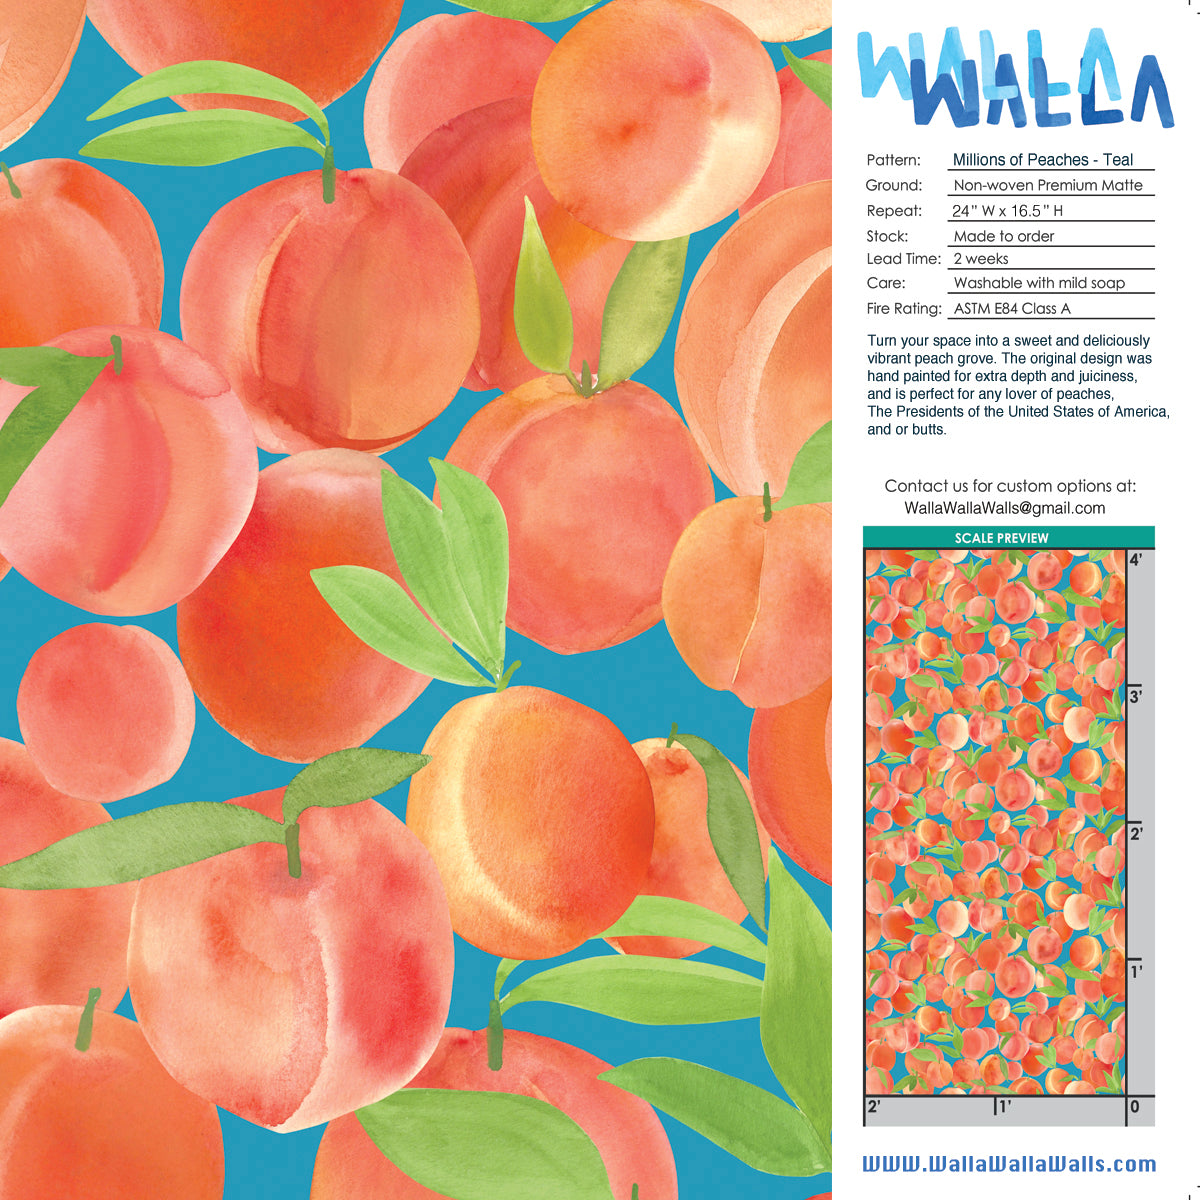 Millions of Peaches - Eggplant – WallaWallaWalls